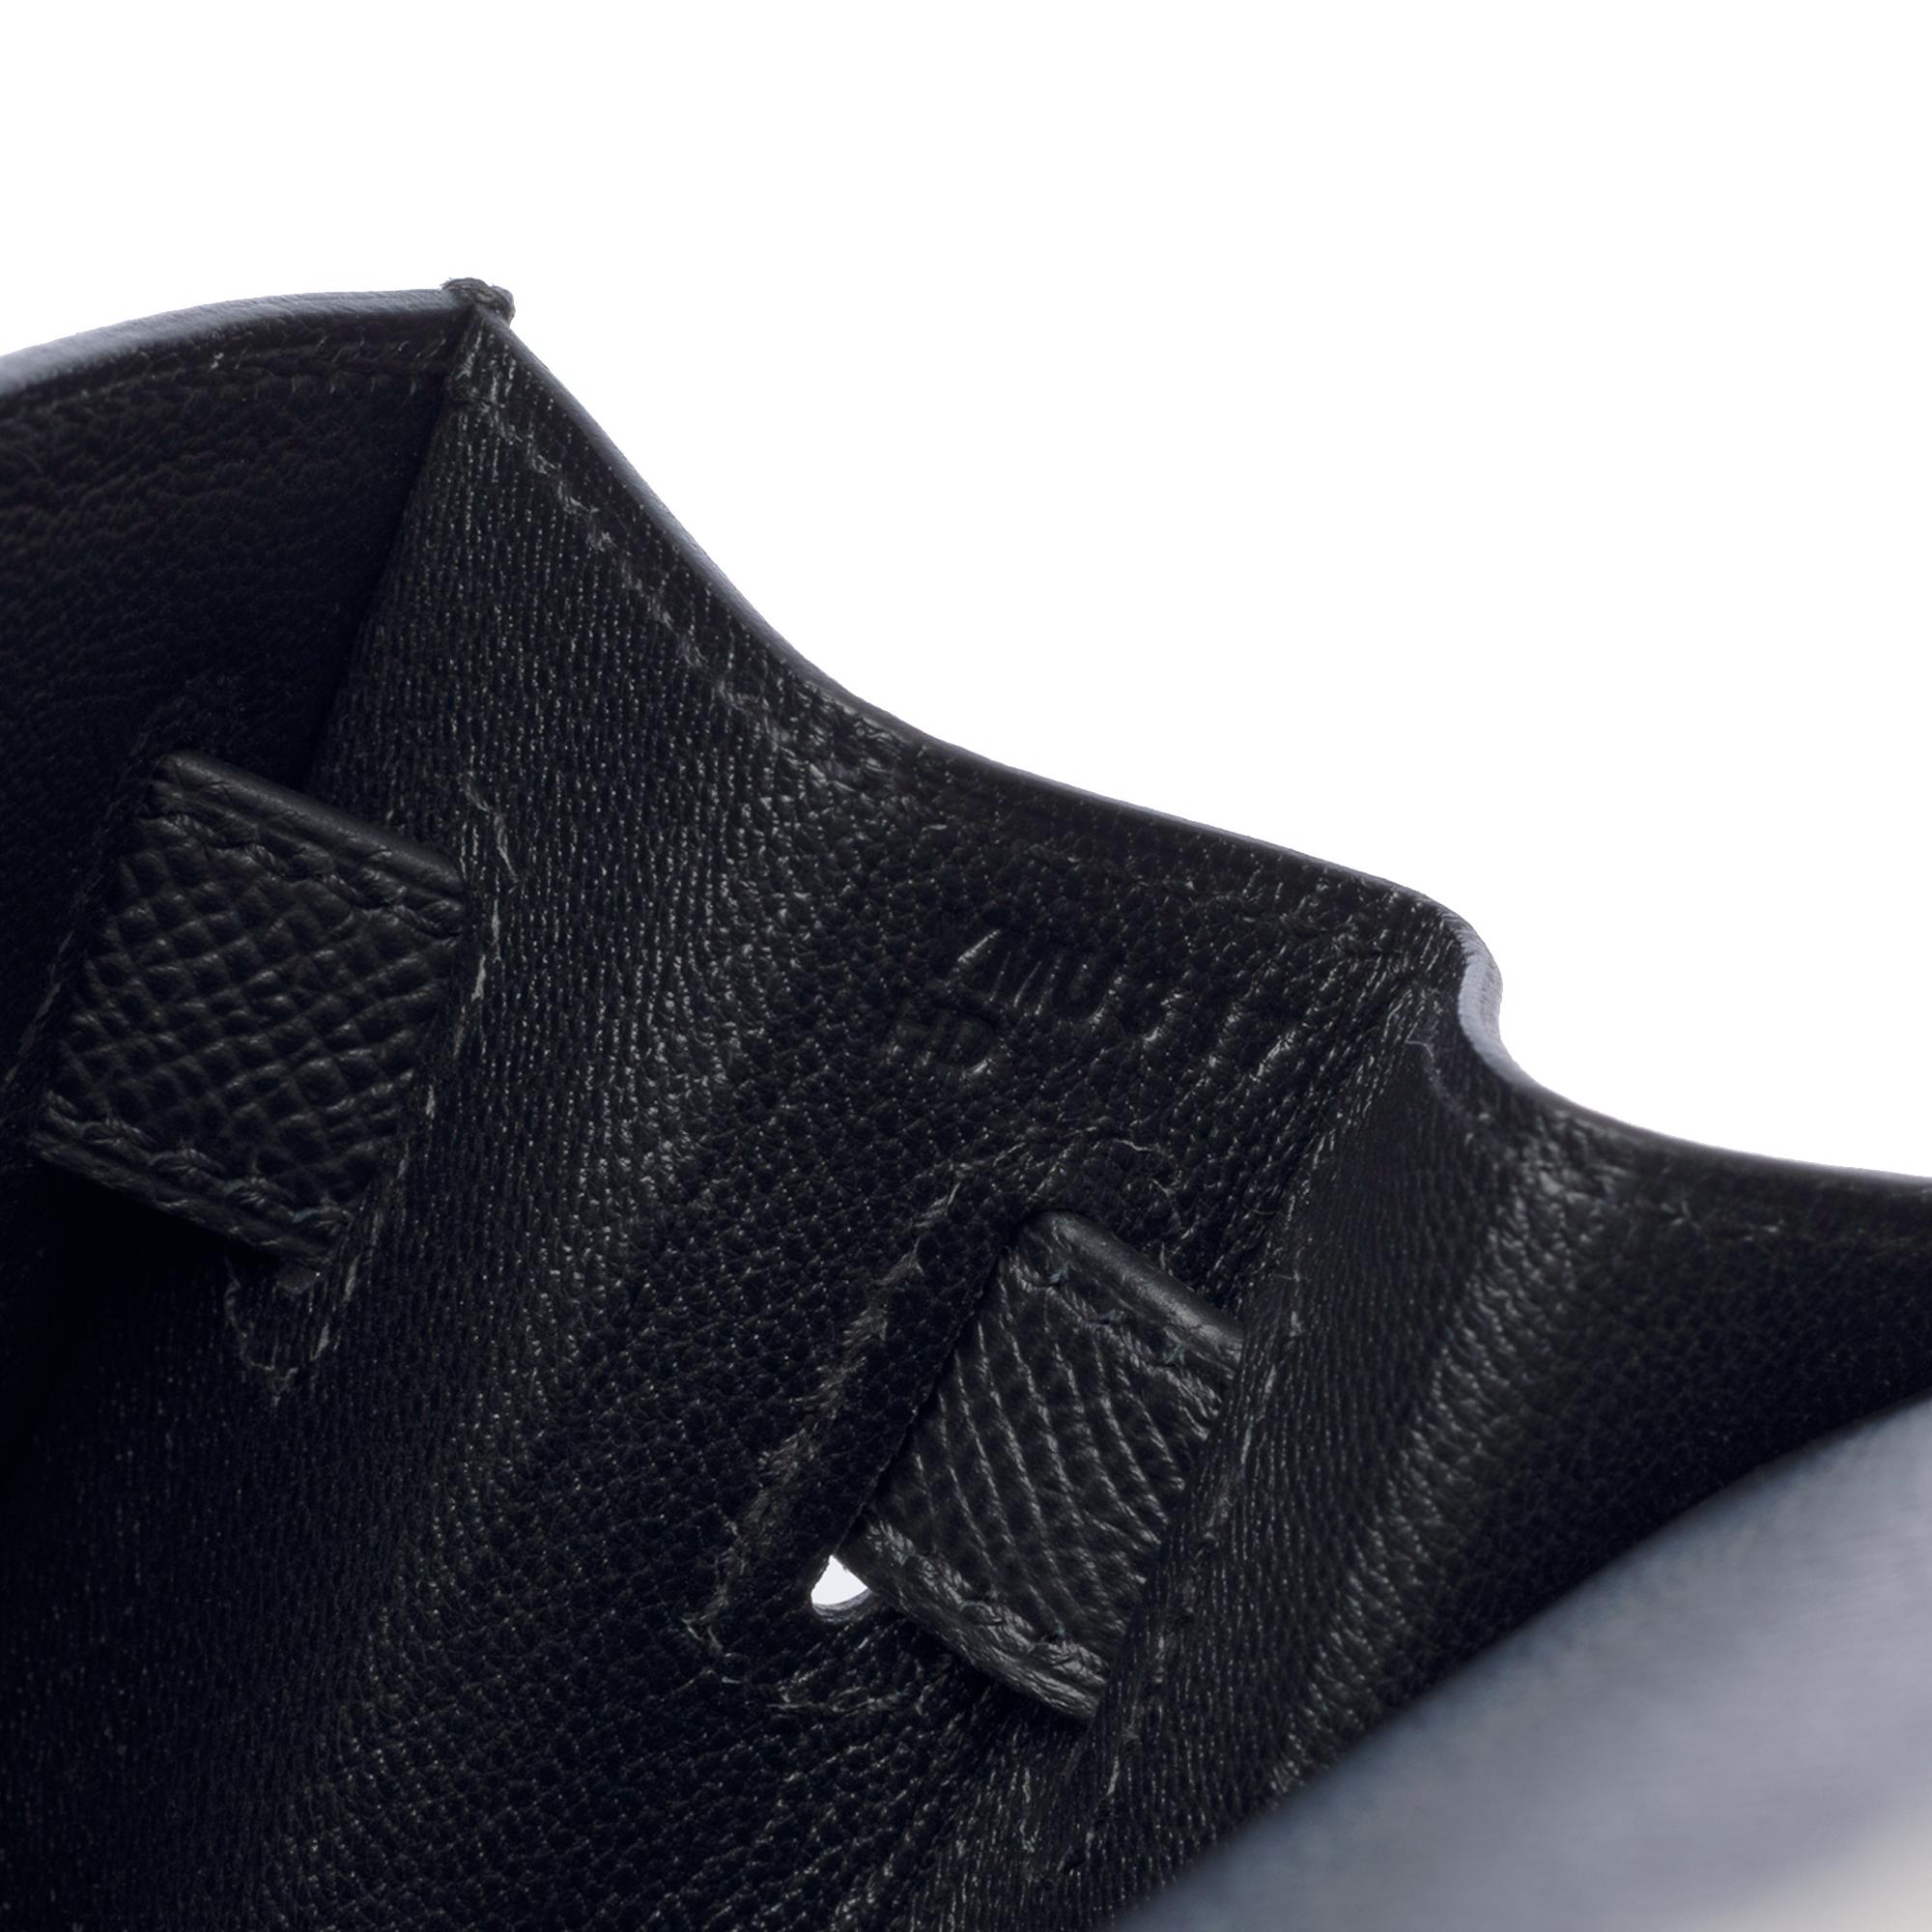 New Hermès Kelly 28 sellier handbag strap in black Epsom leather, SHW 1